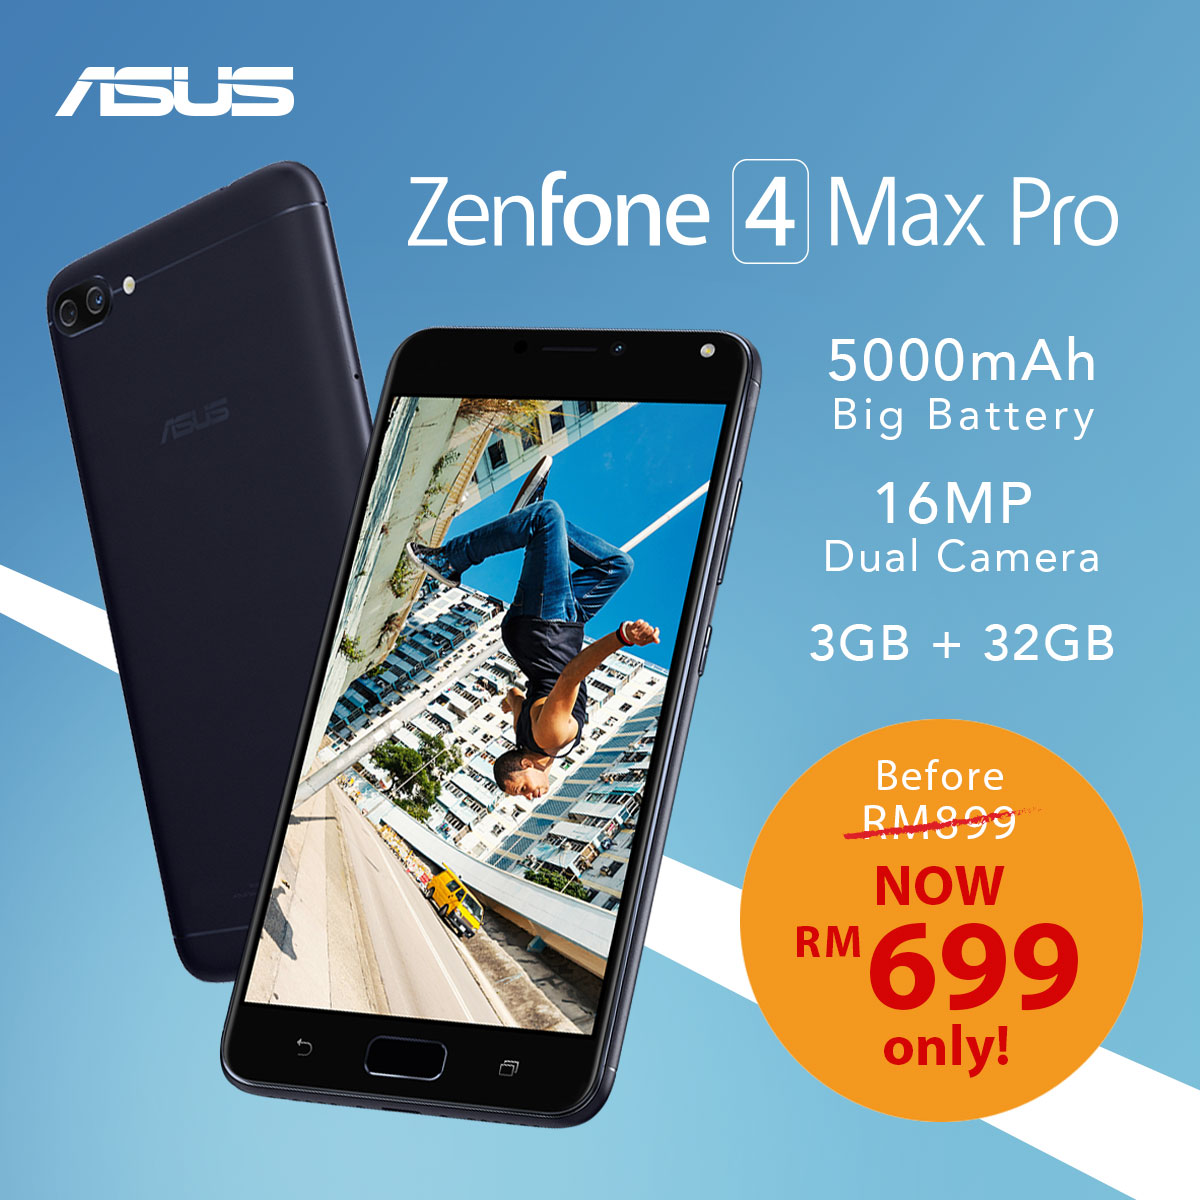 ASUS ZenFone 4 Max Pro is now RM699